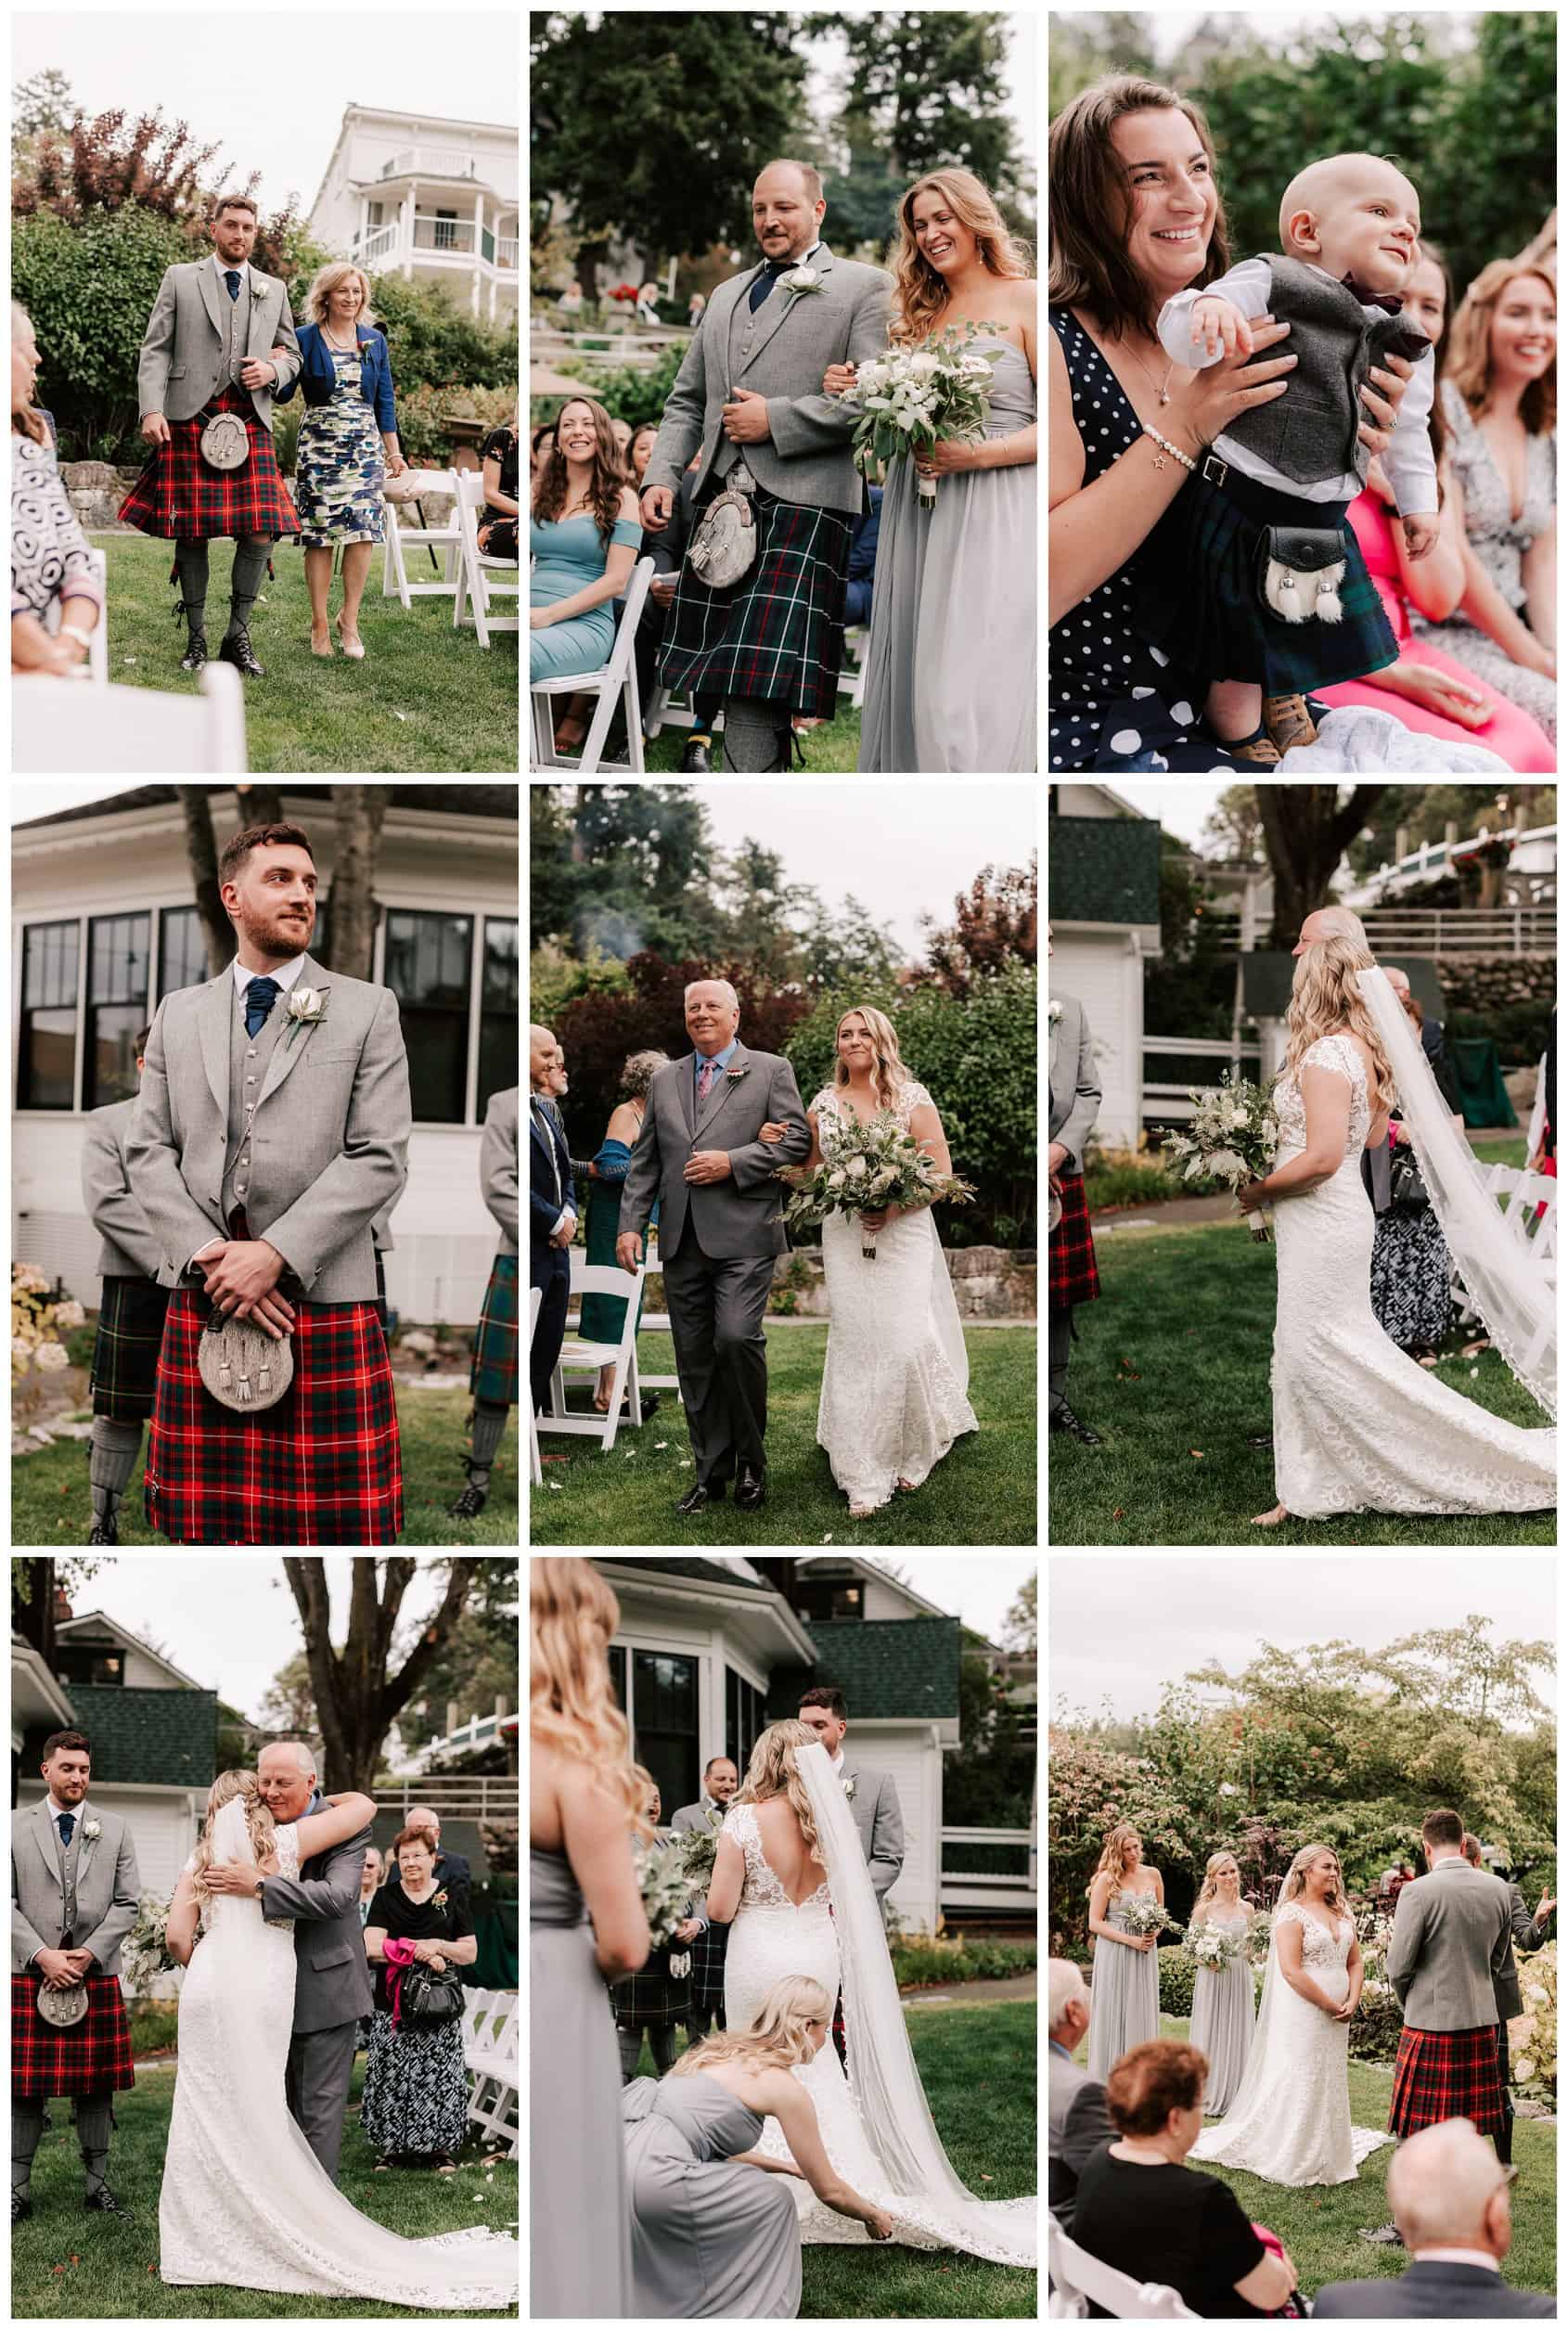 Roche Harbor wedding ceremony photos by Luma Weddings